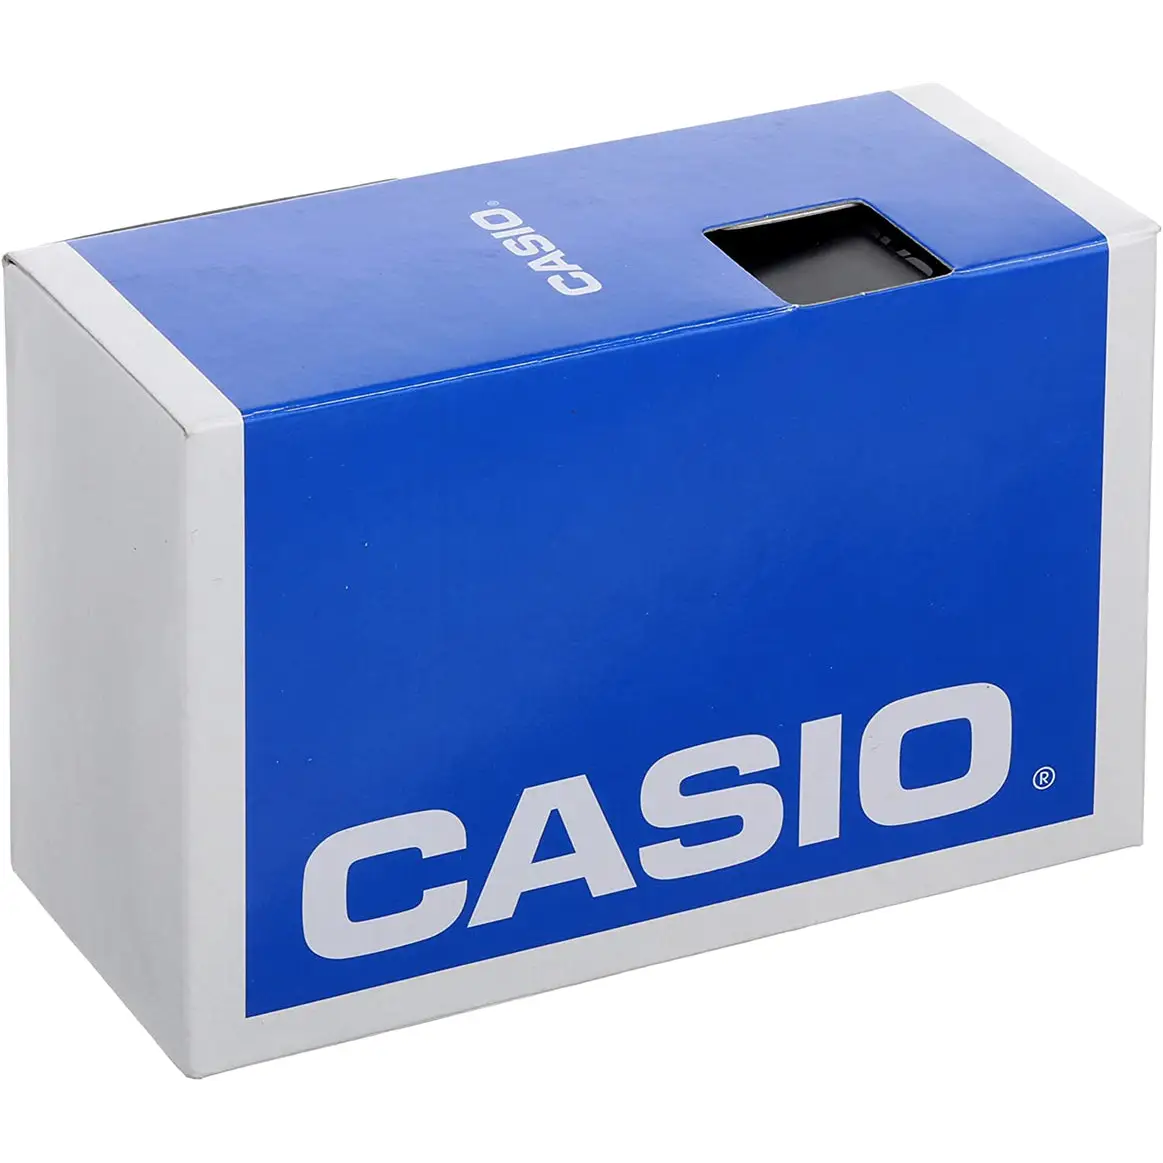 Casio Men’s Digital Quartz LED Light 7-Year Battery Black